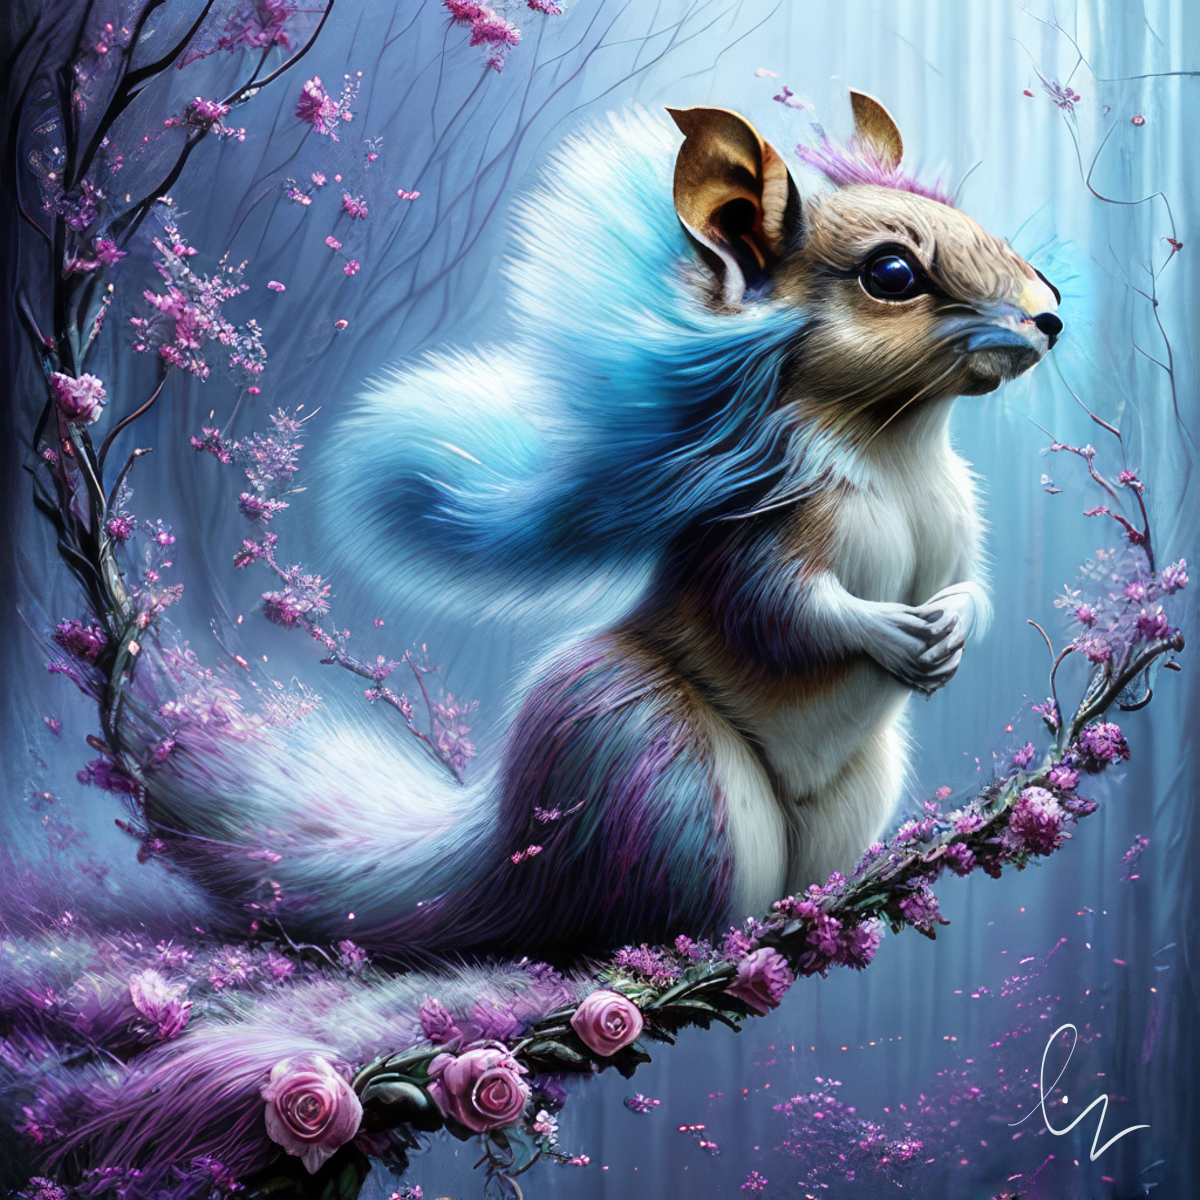 Tiny) Squirrel Avatar - White